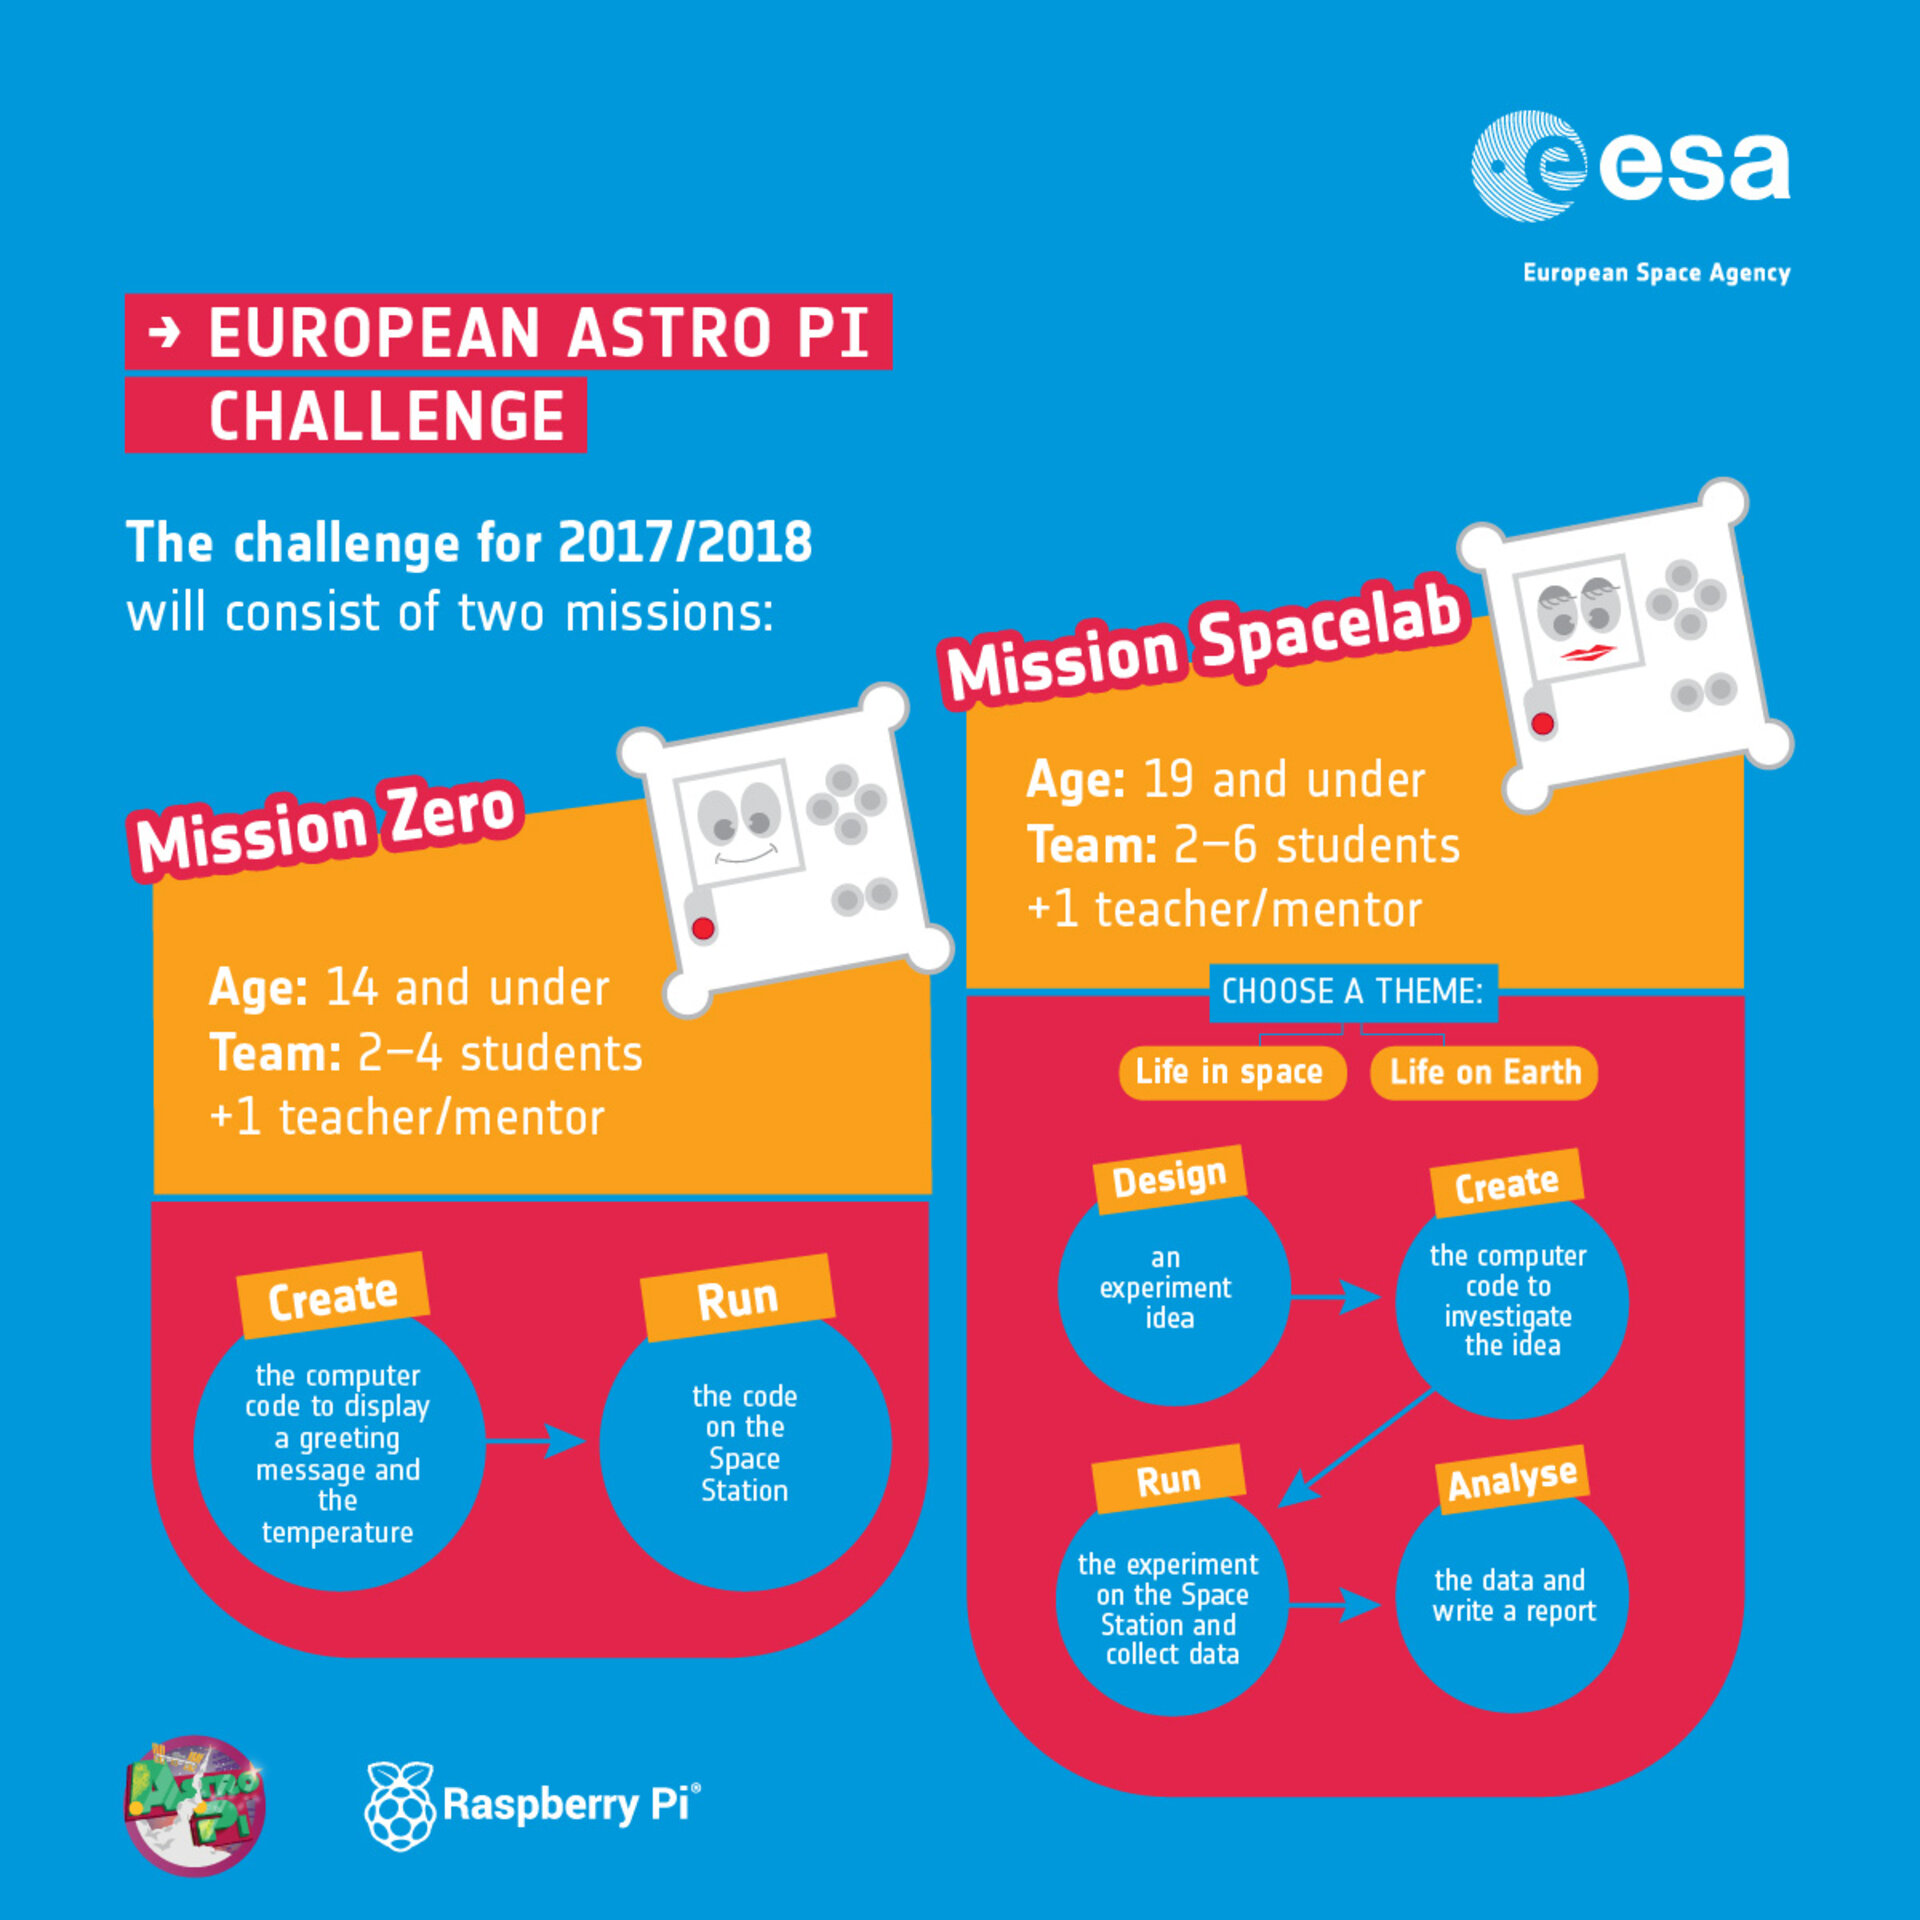 European Astro Pi Challenge 2017-2018 - Overview